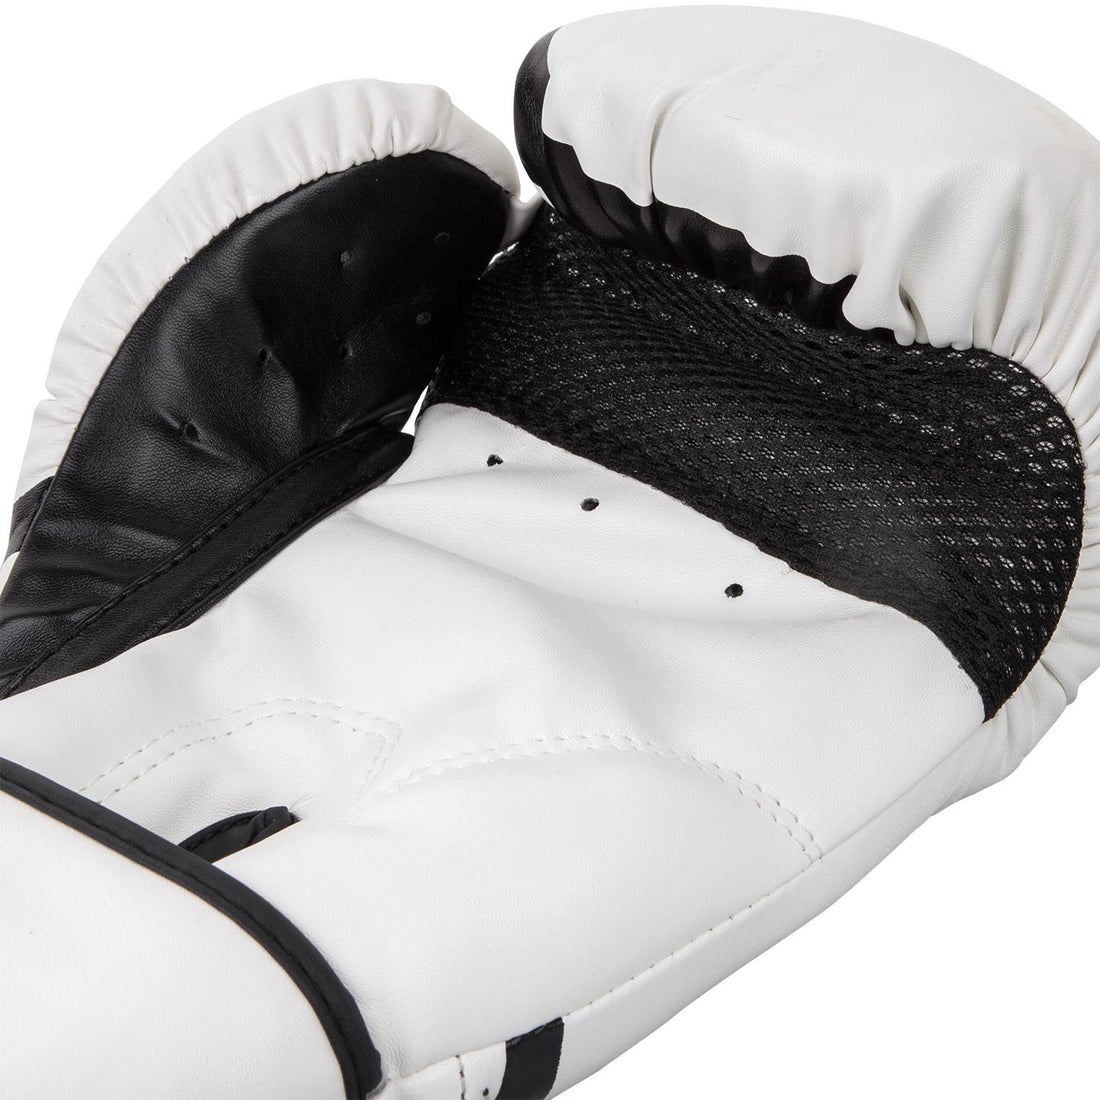 Venum Challenger 2.0 Boxing Gloves - Best Price online Prokicksports.com